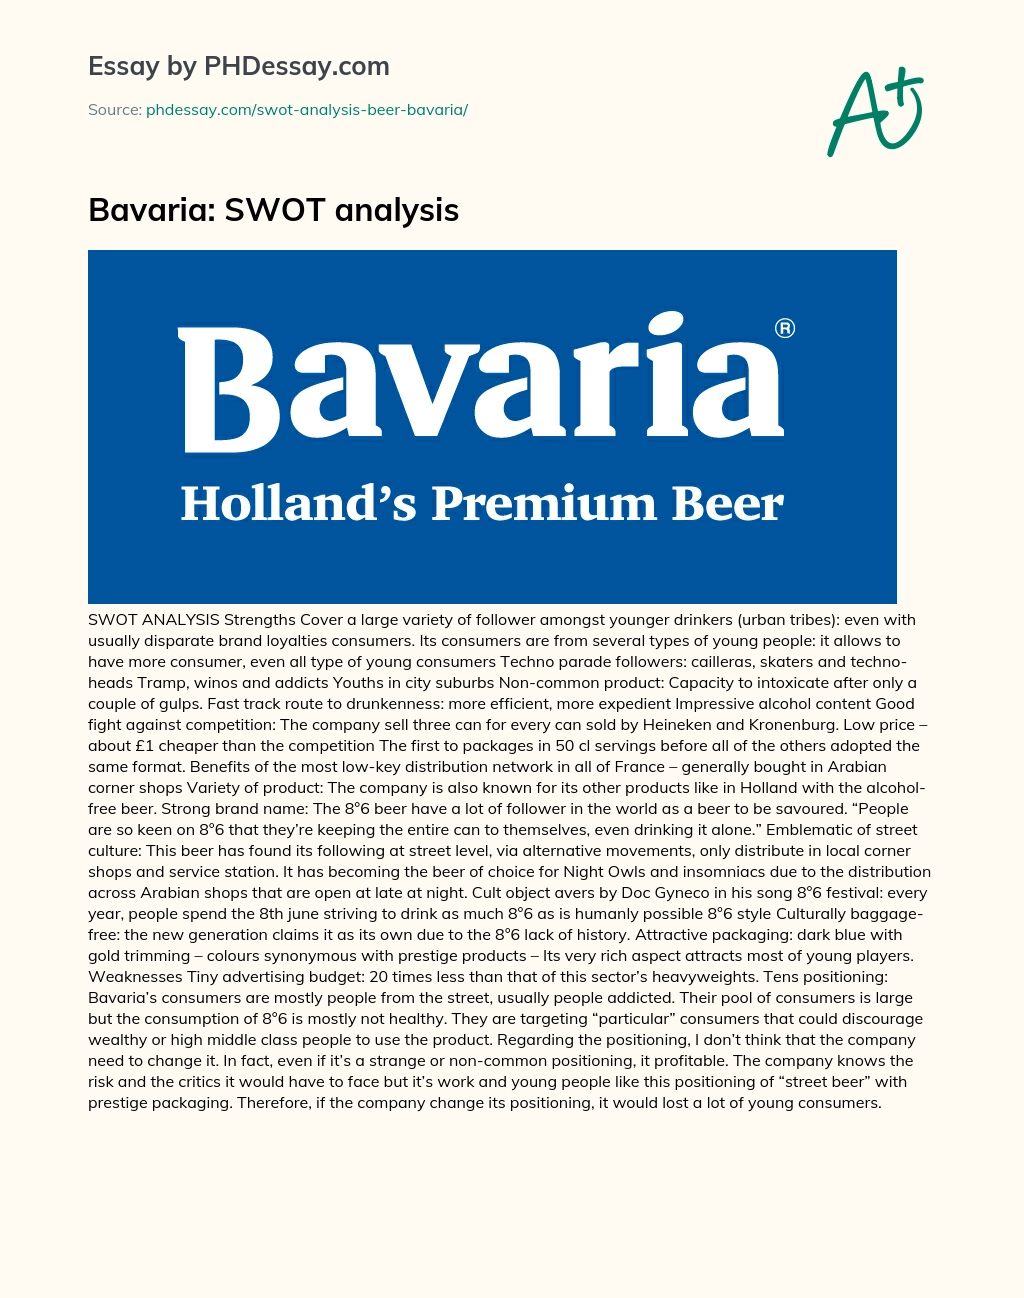 Bavaria: SWOT analysis essay